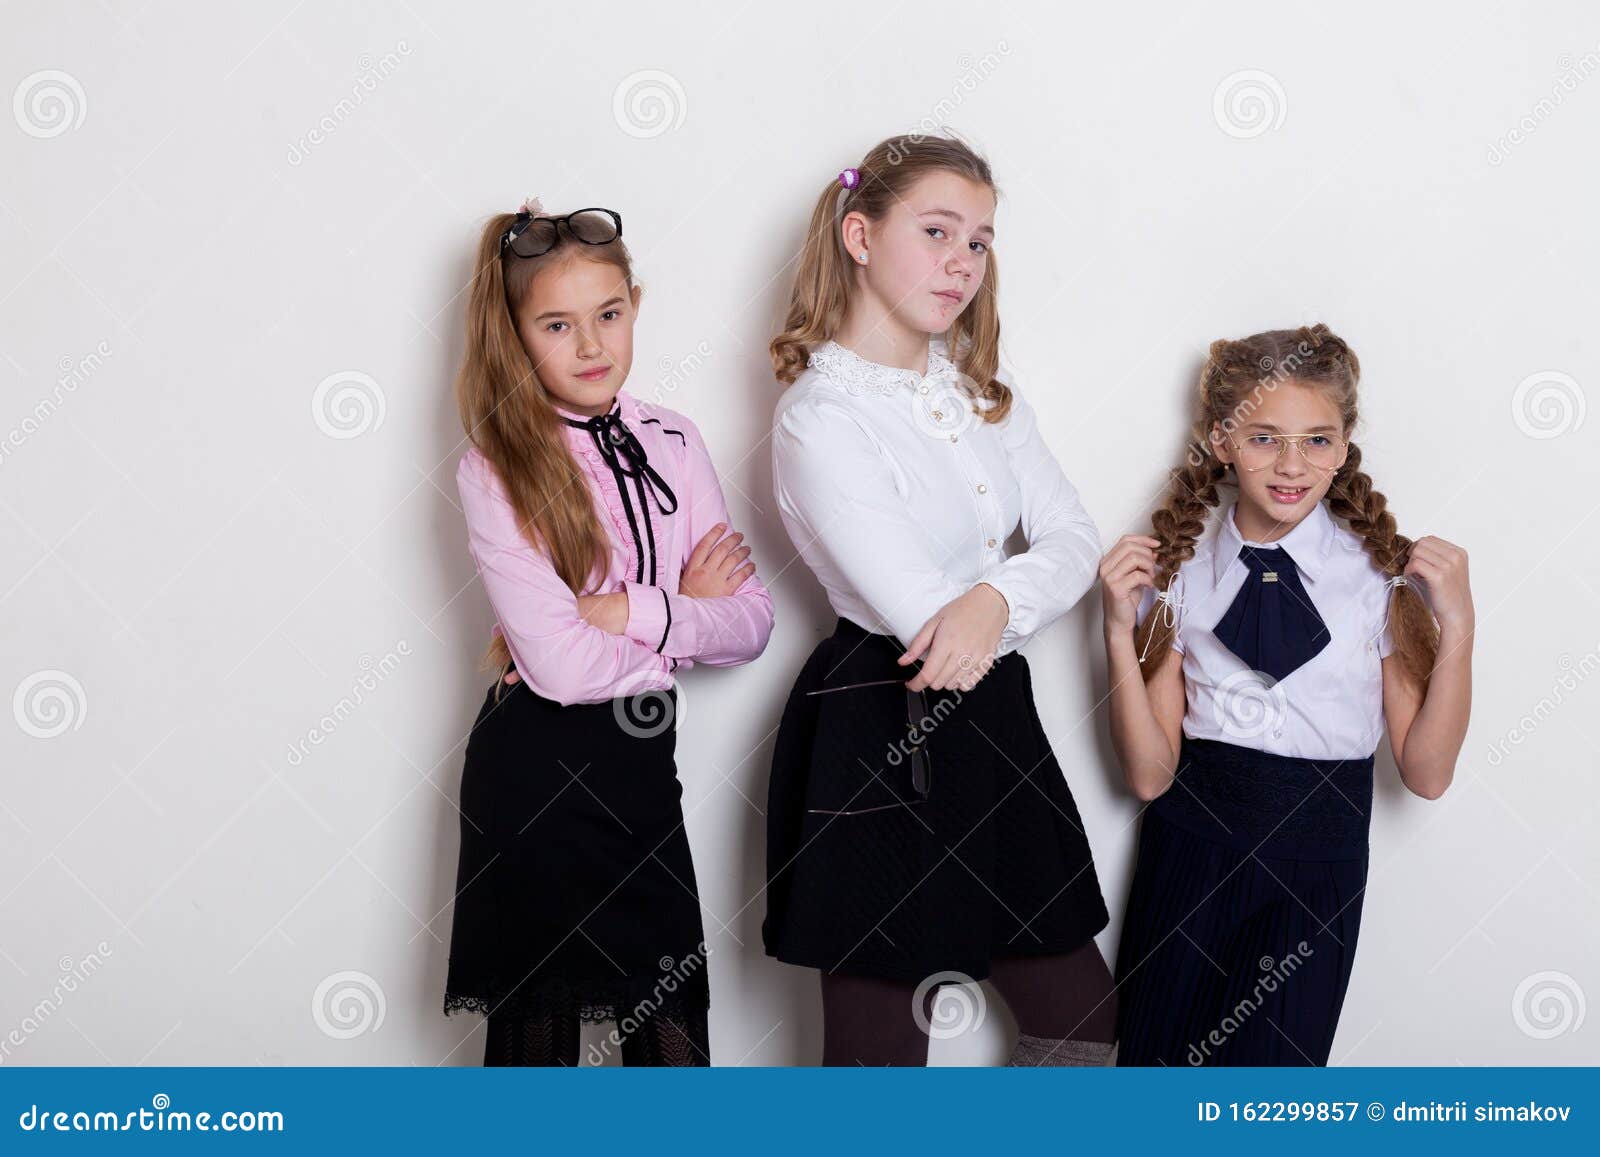 All Girls School Class Photo